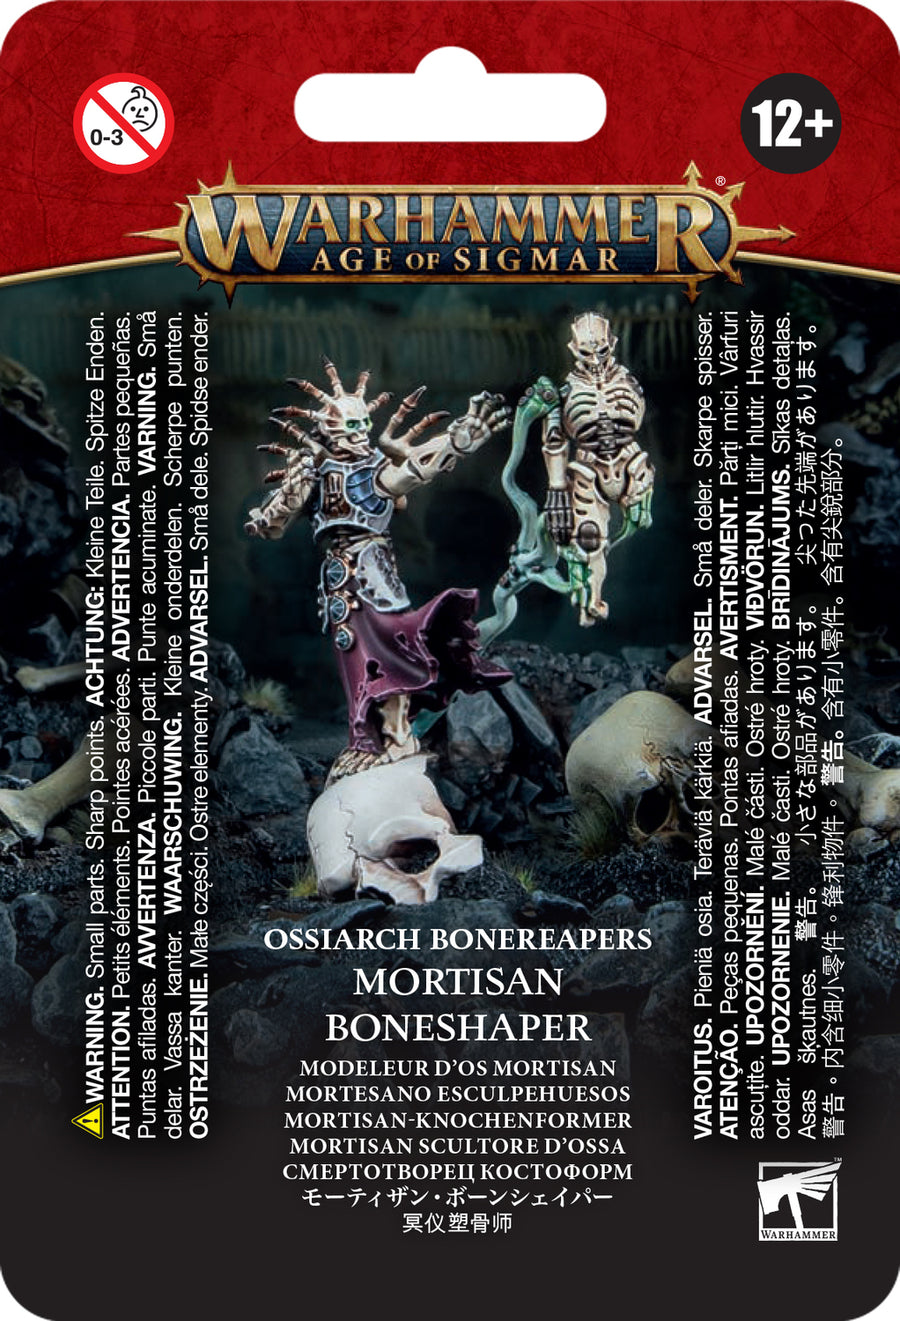 Ossiarch Bonereapers: MORTISAN BONESHAPER